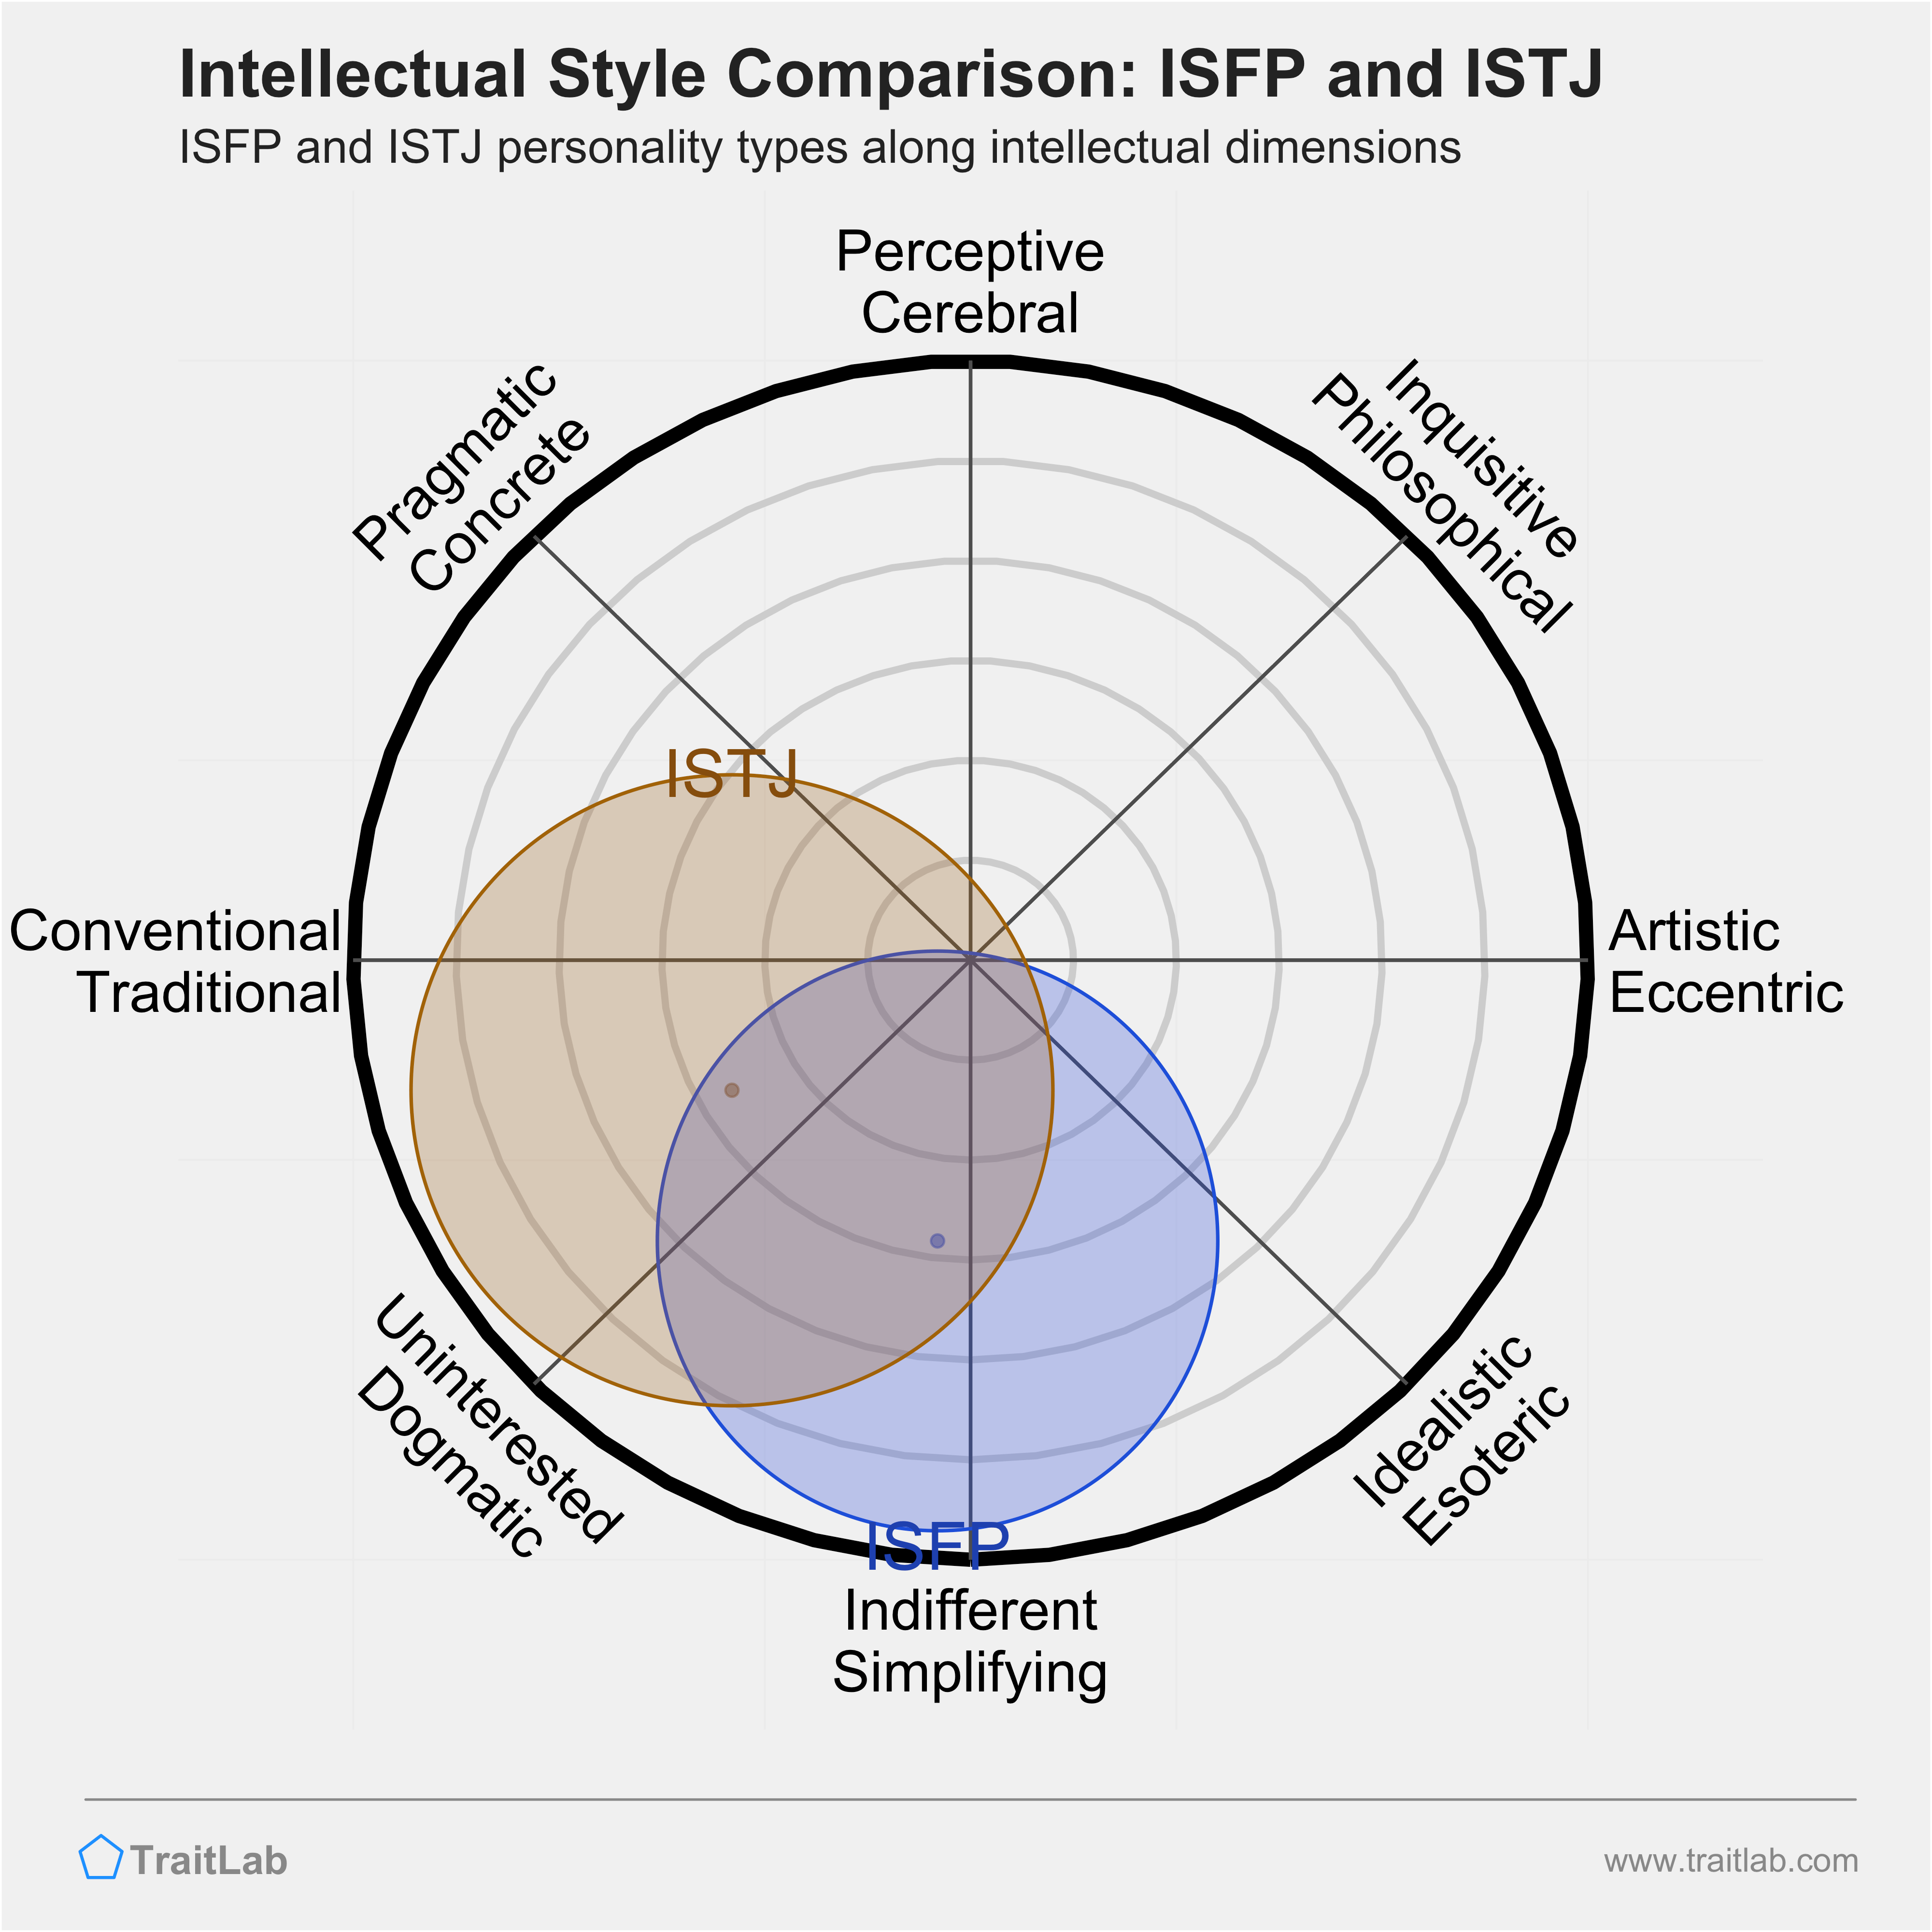 ISFP and ISTJ comparison across intellectual dimensions